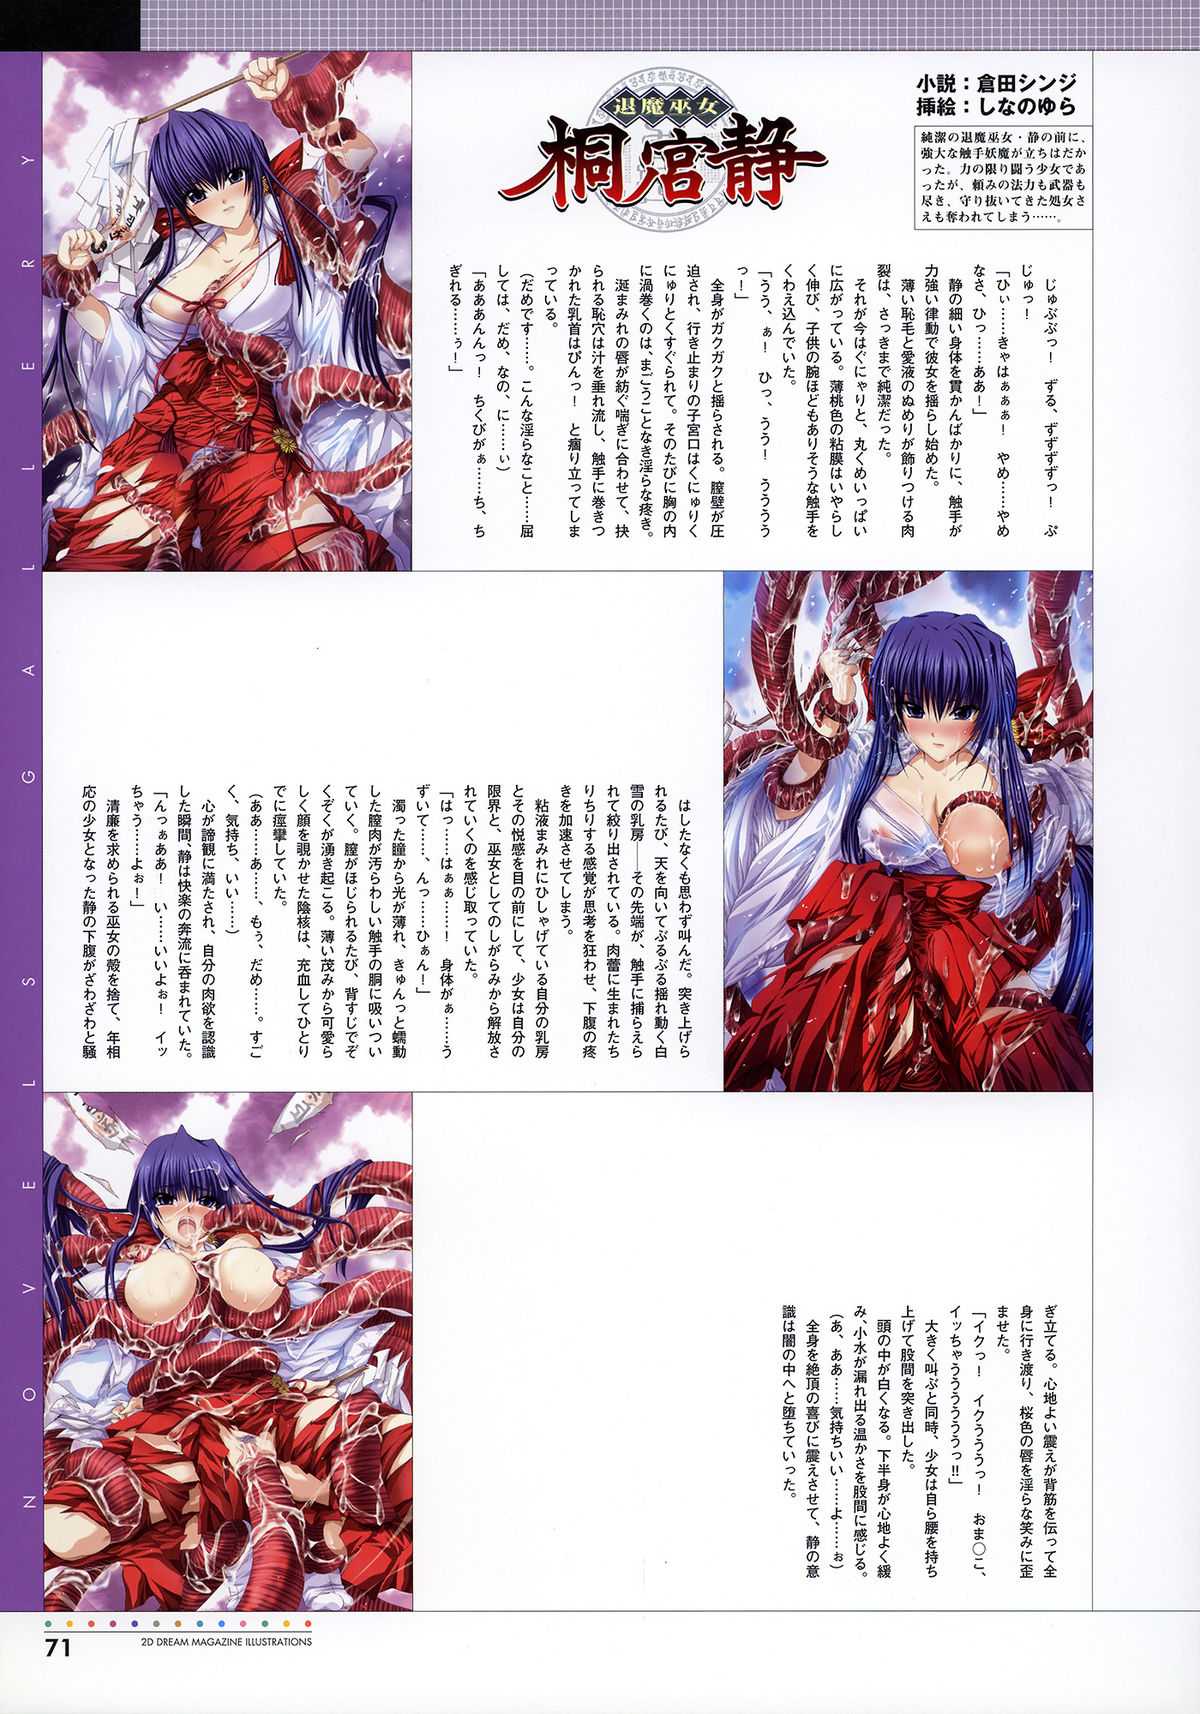 [Illustrations] Nijigen Dream Magazine Illustrations #1 [イラスト集] 二次元ドリームマガジンイラストレーションズ